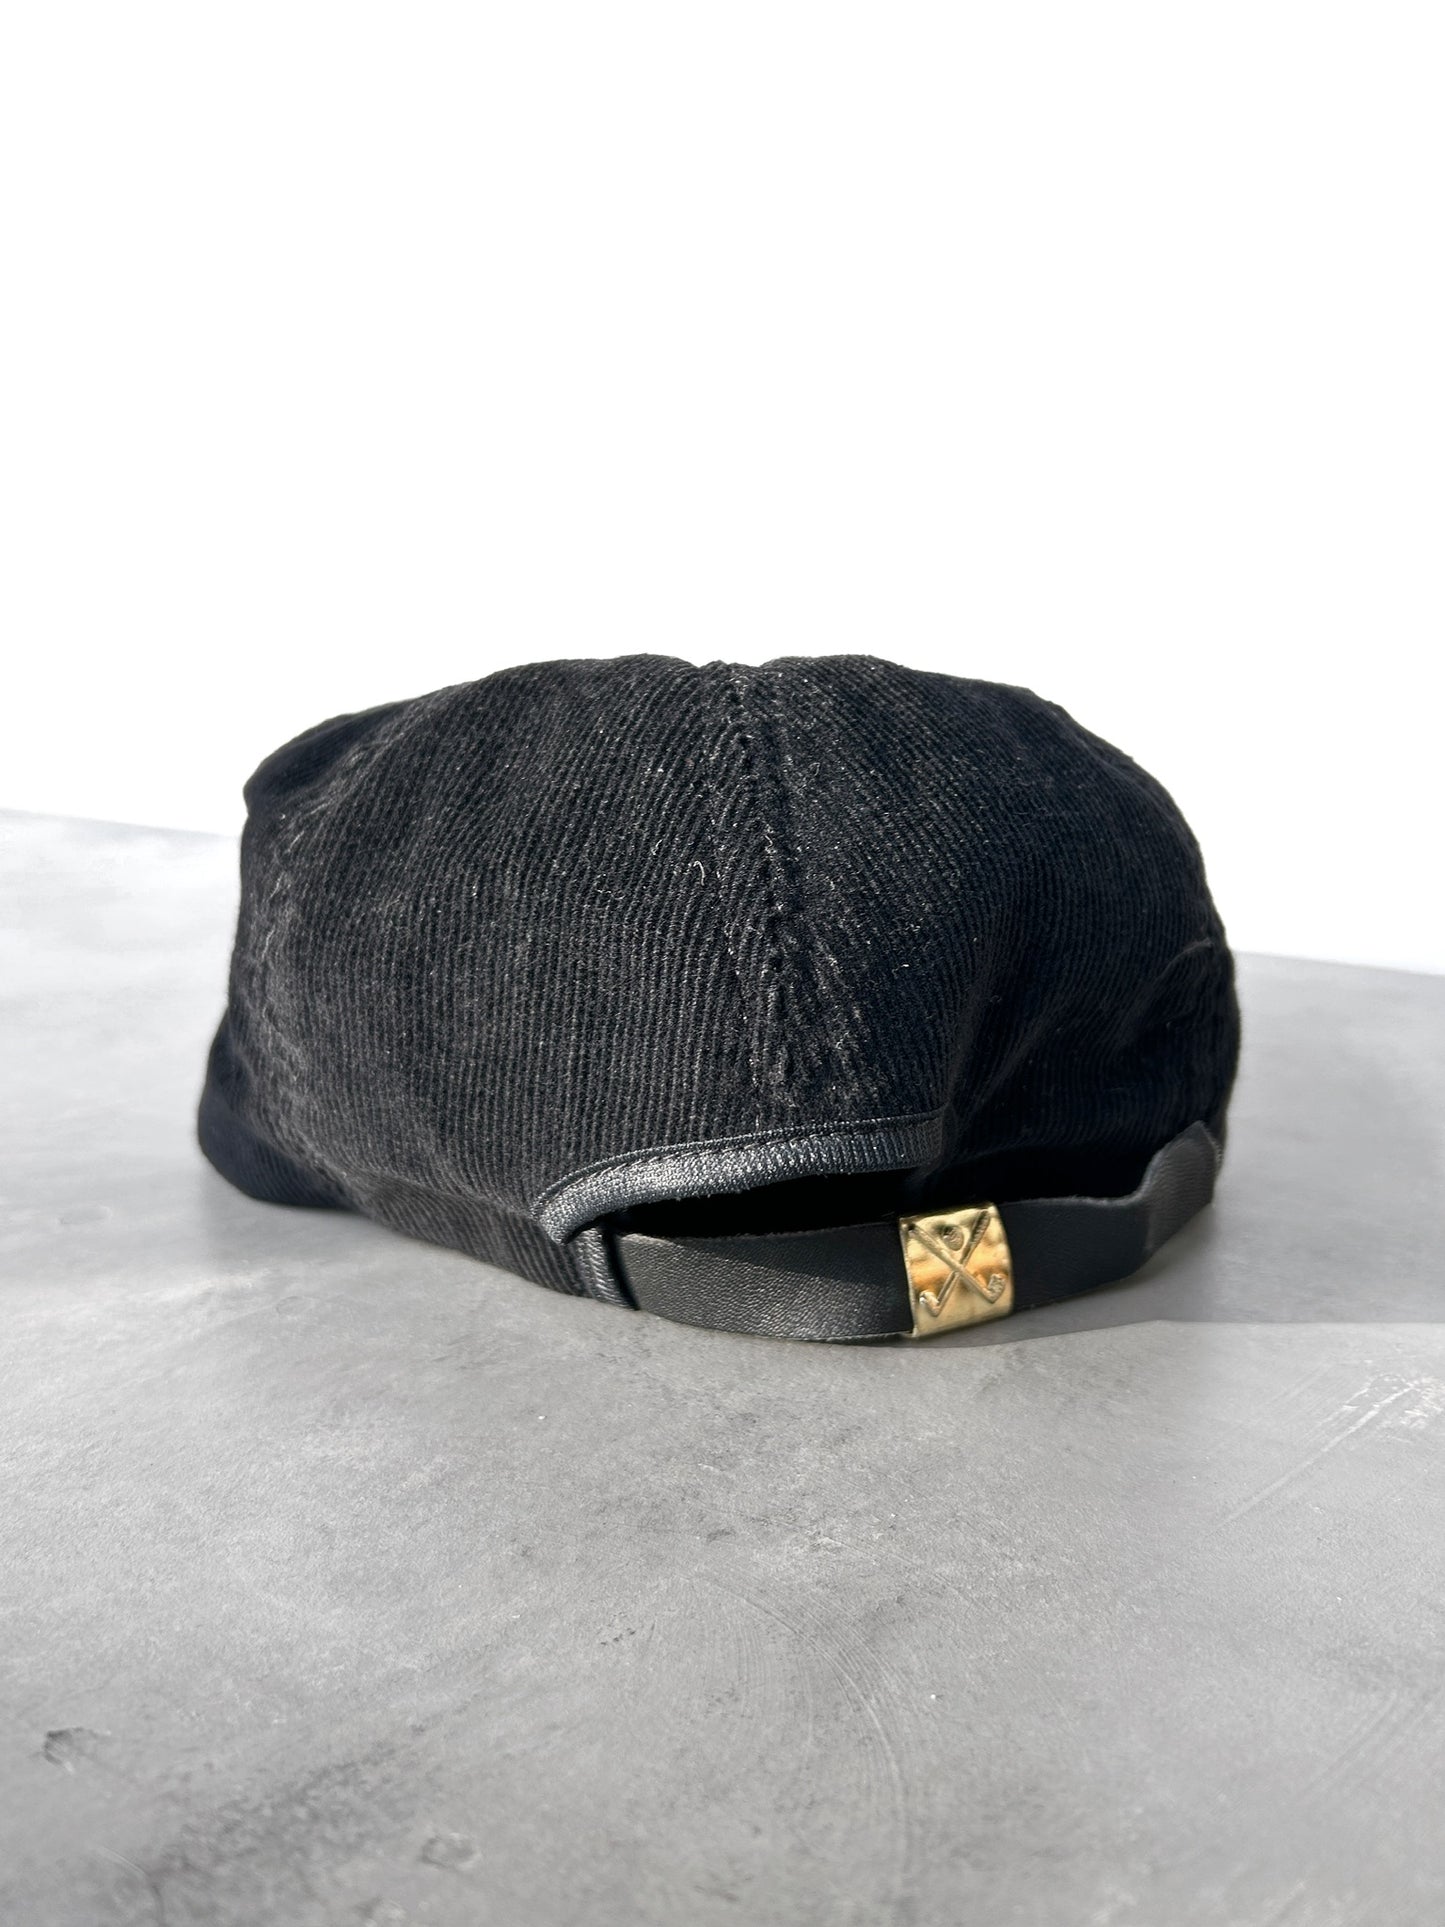 Corduroy Promotional Hat 80's